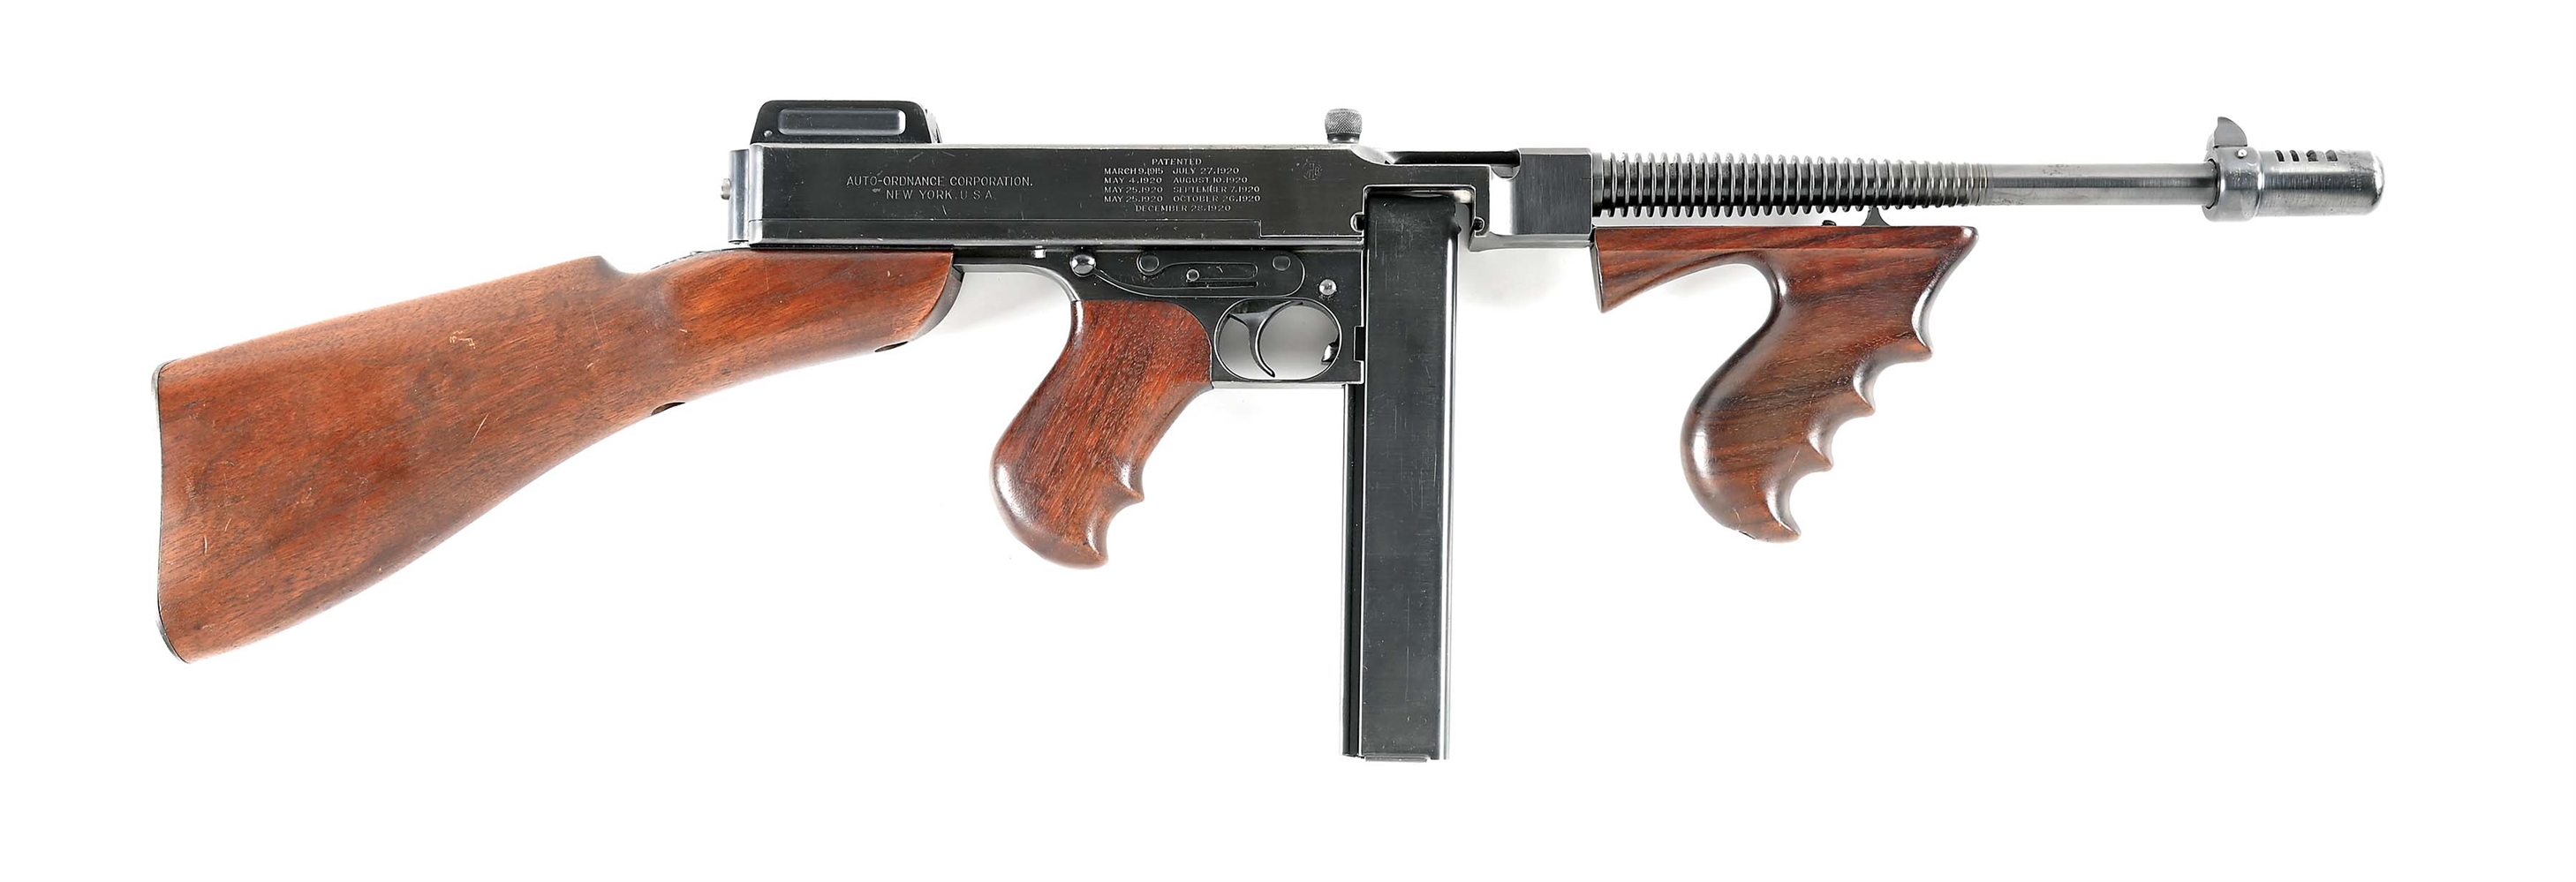 (N) COLT MODEL 1928 NAVY THOMPSON MACHINE GUN (CURIO & RELIC).